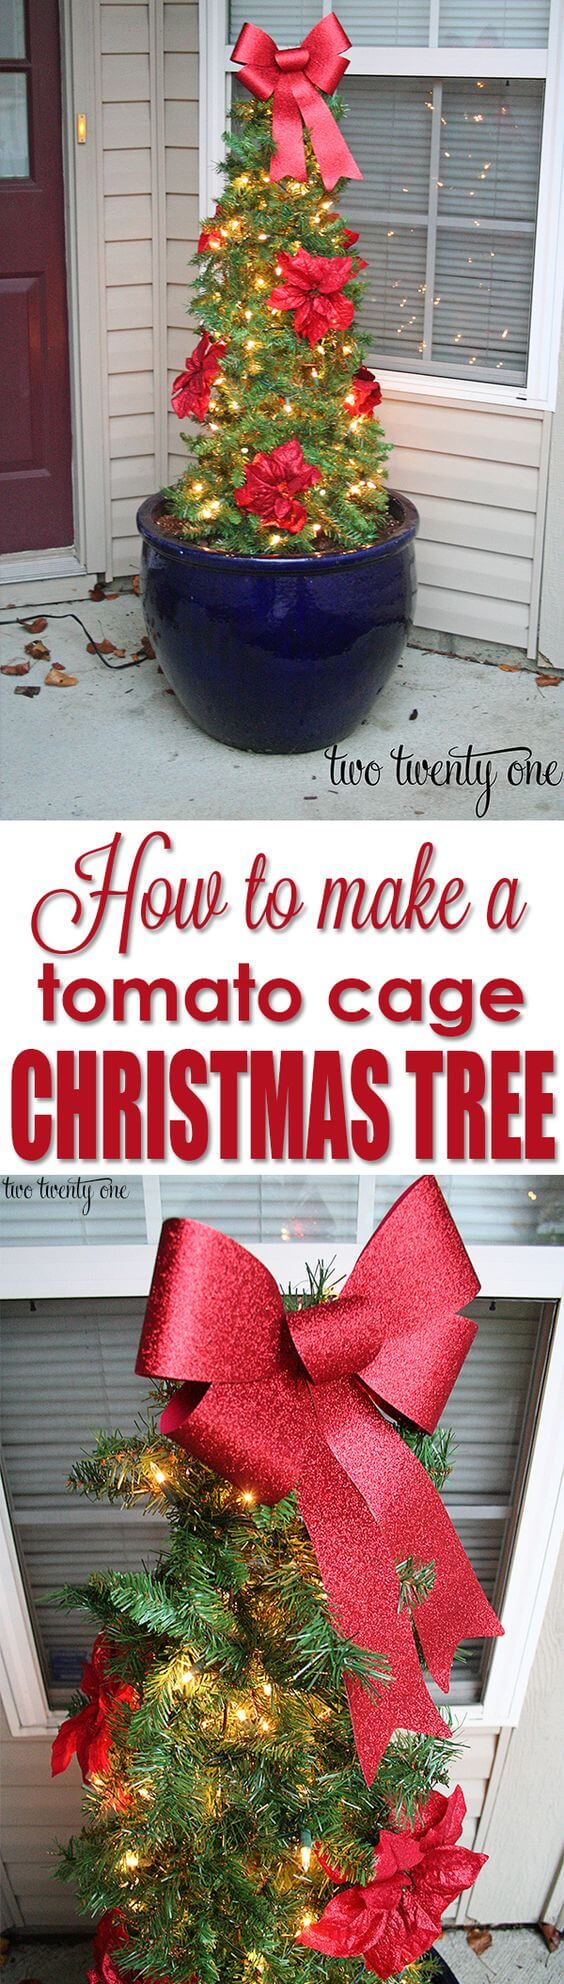 DIY Decorative Tomato Cage Christmas Tree